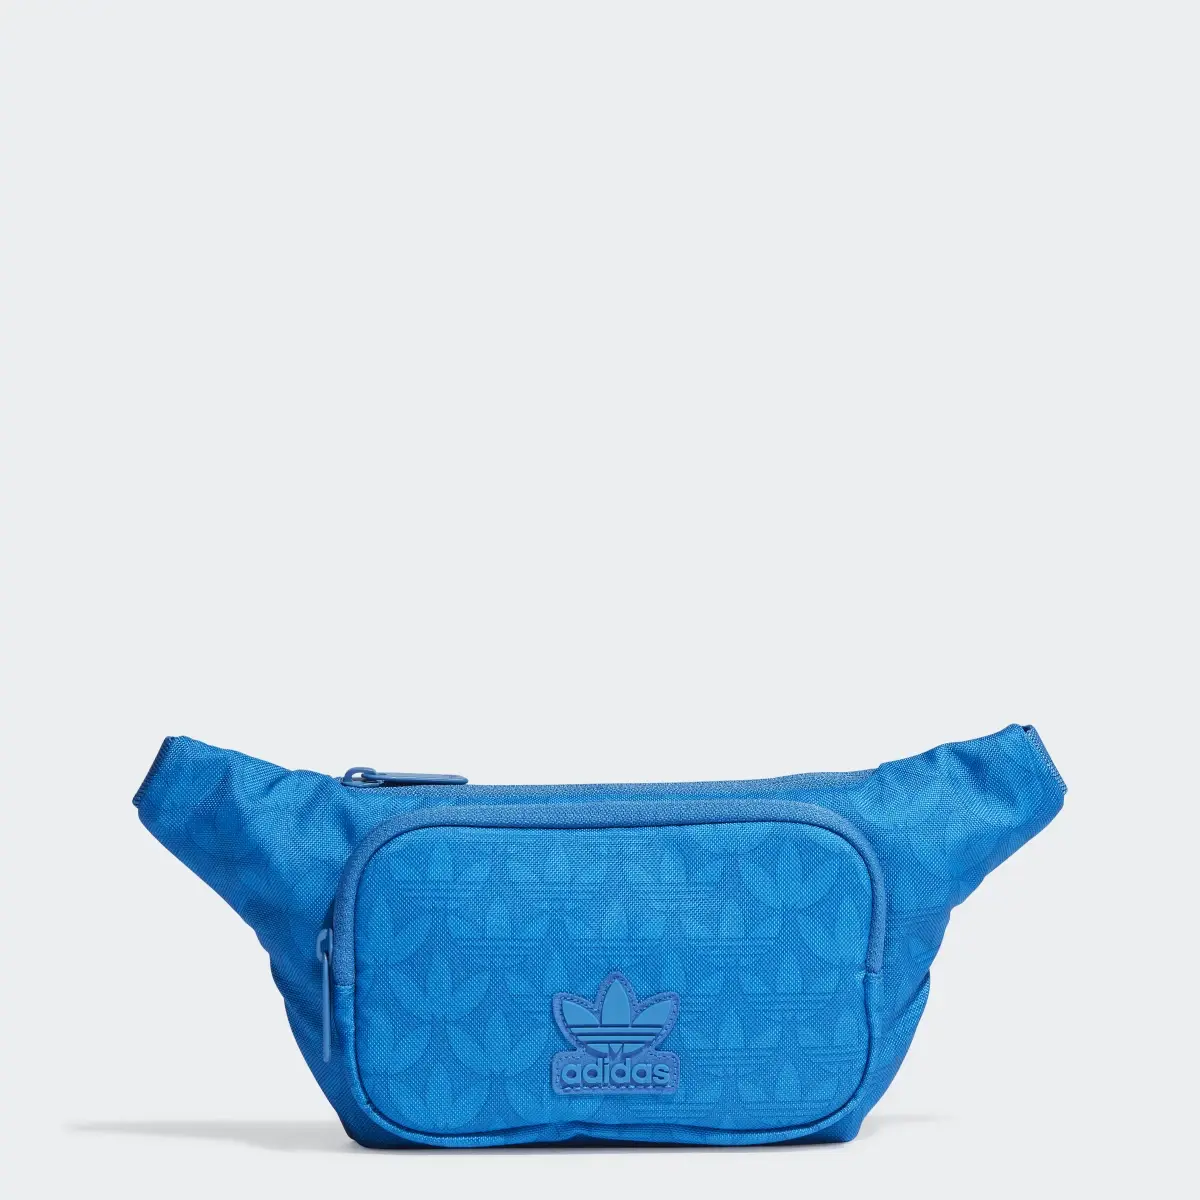 Adidas Monogram Waist Bag. 1